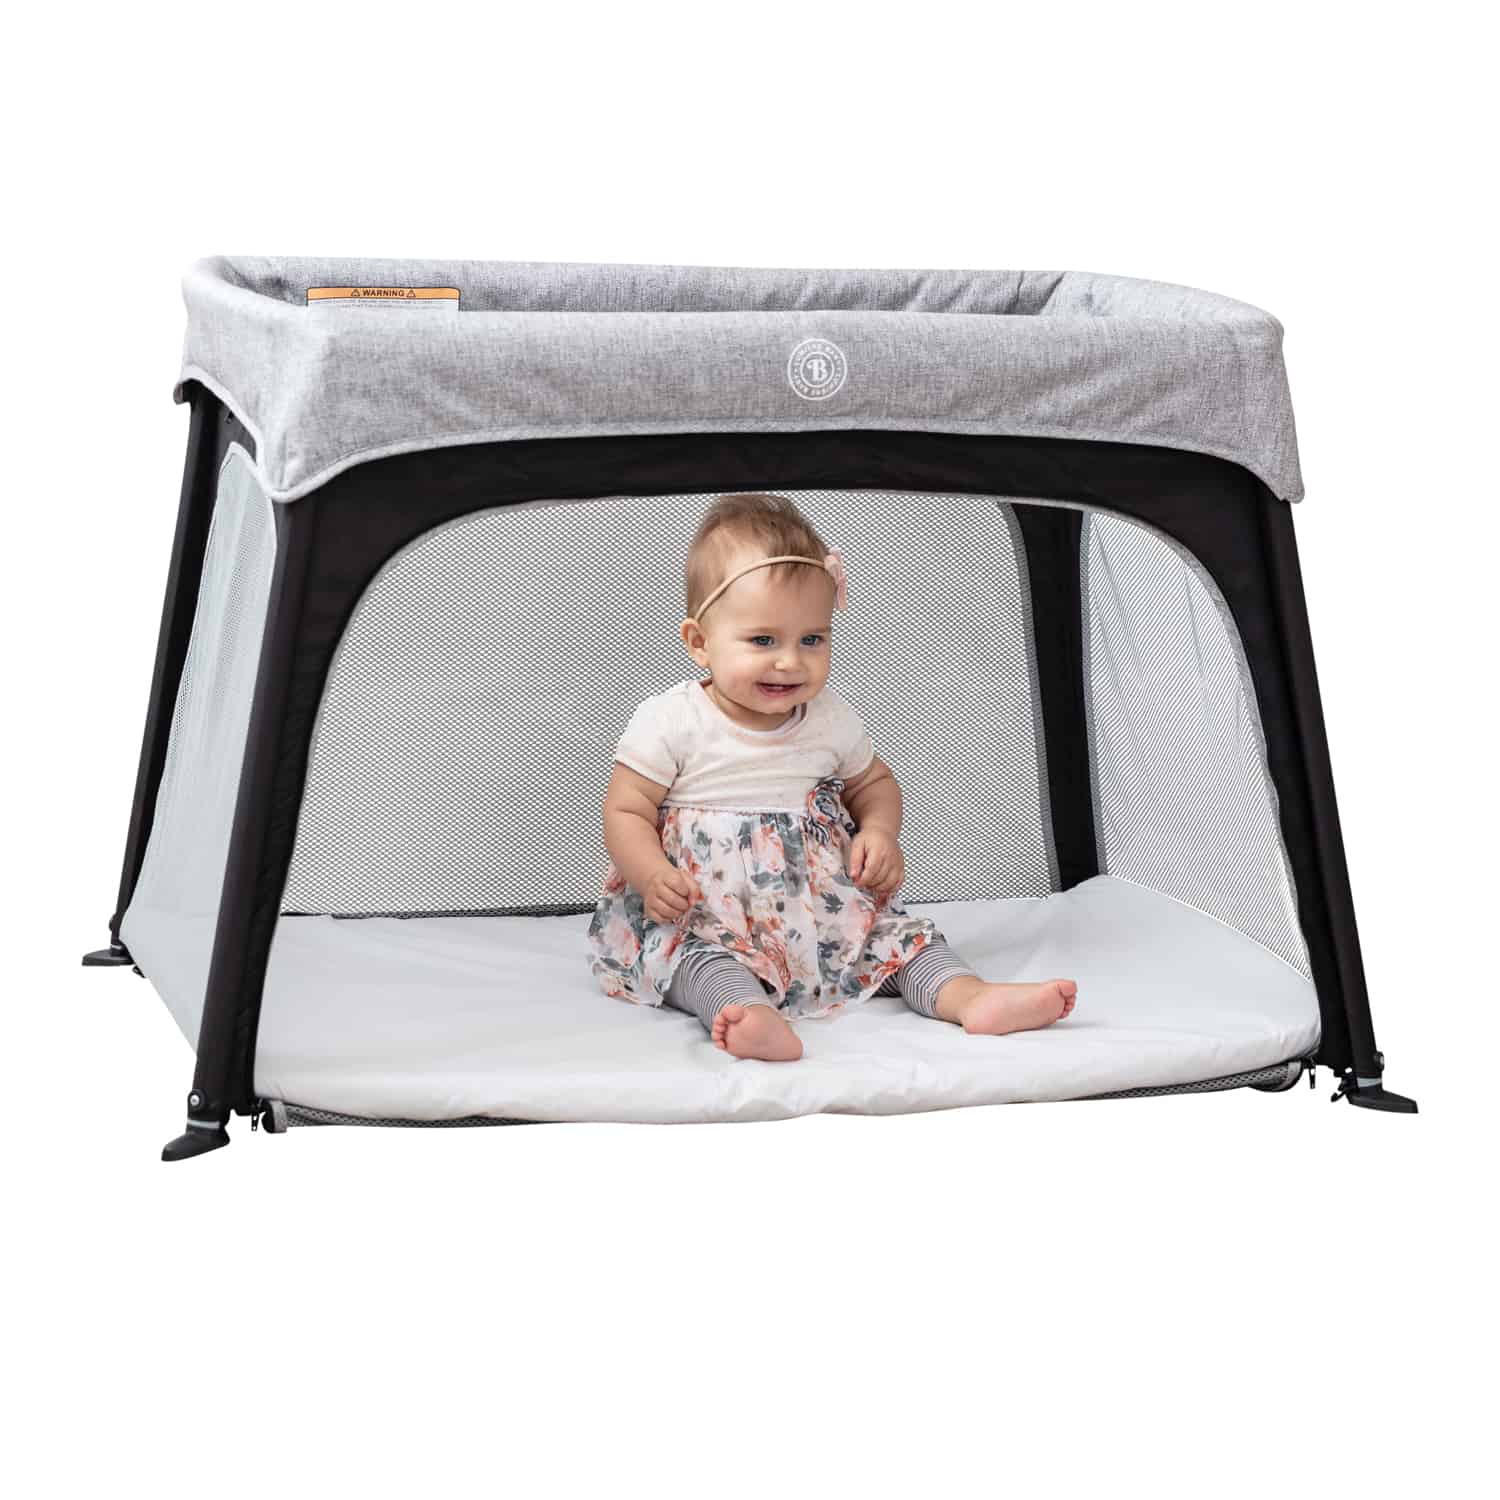 Travel Crib & Play Yard - Breathable & Washable